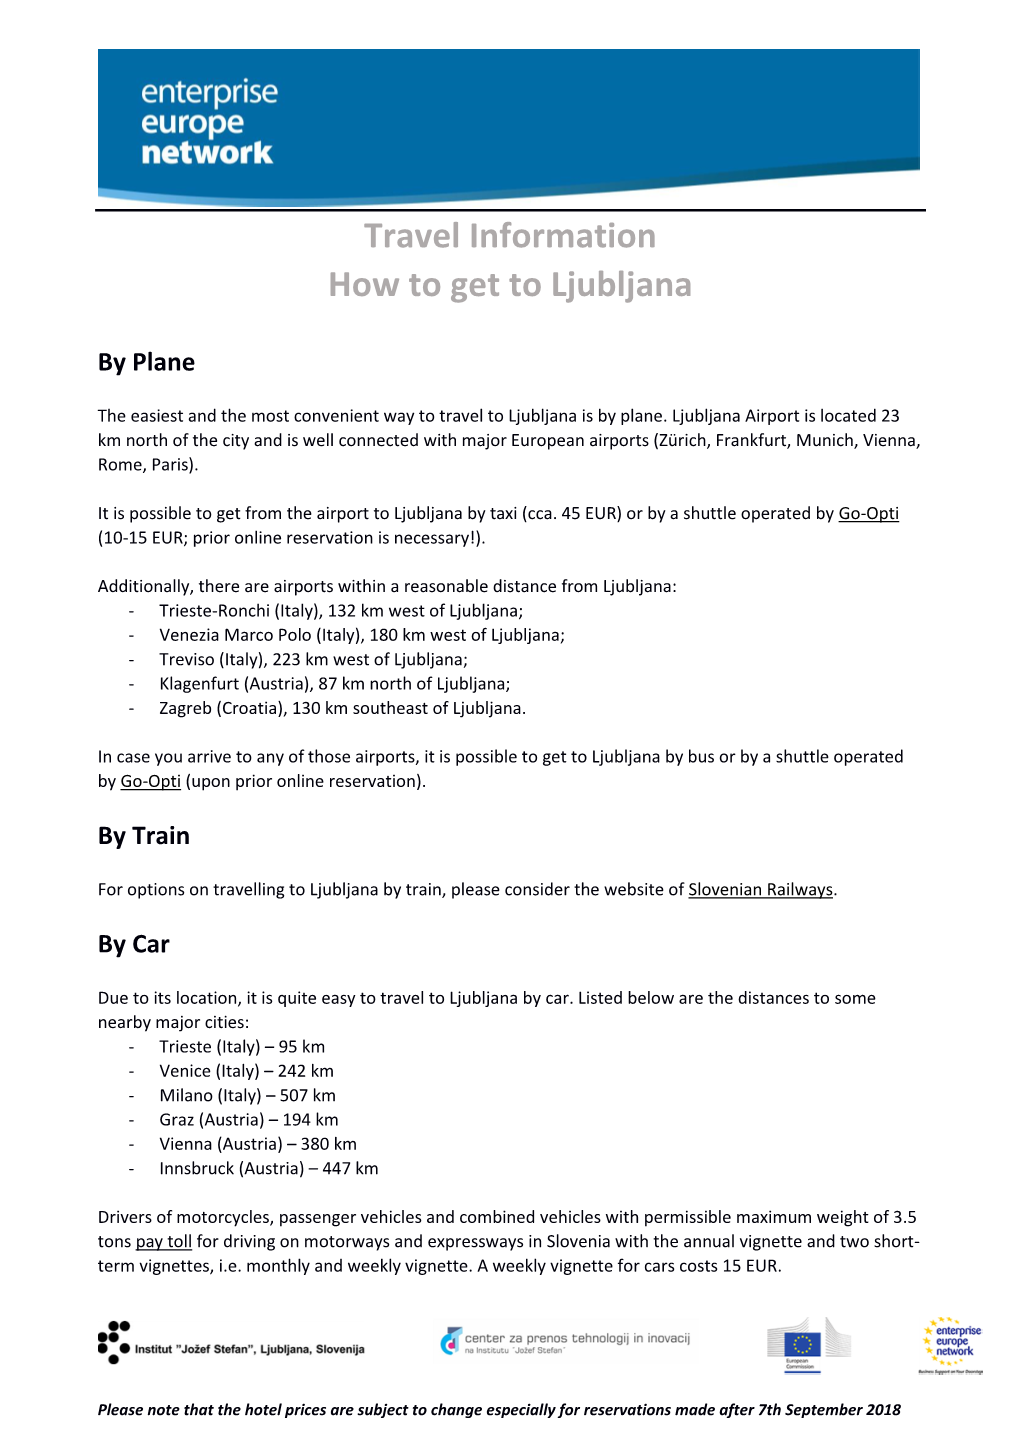 Travel Information How to Get to Ljubljana